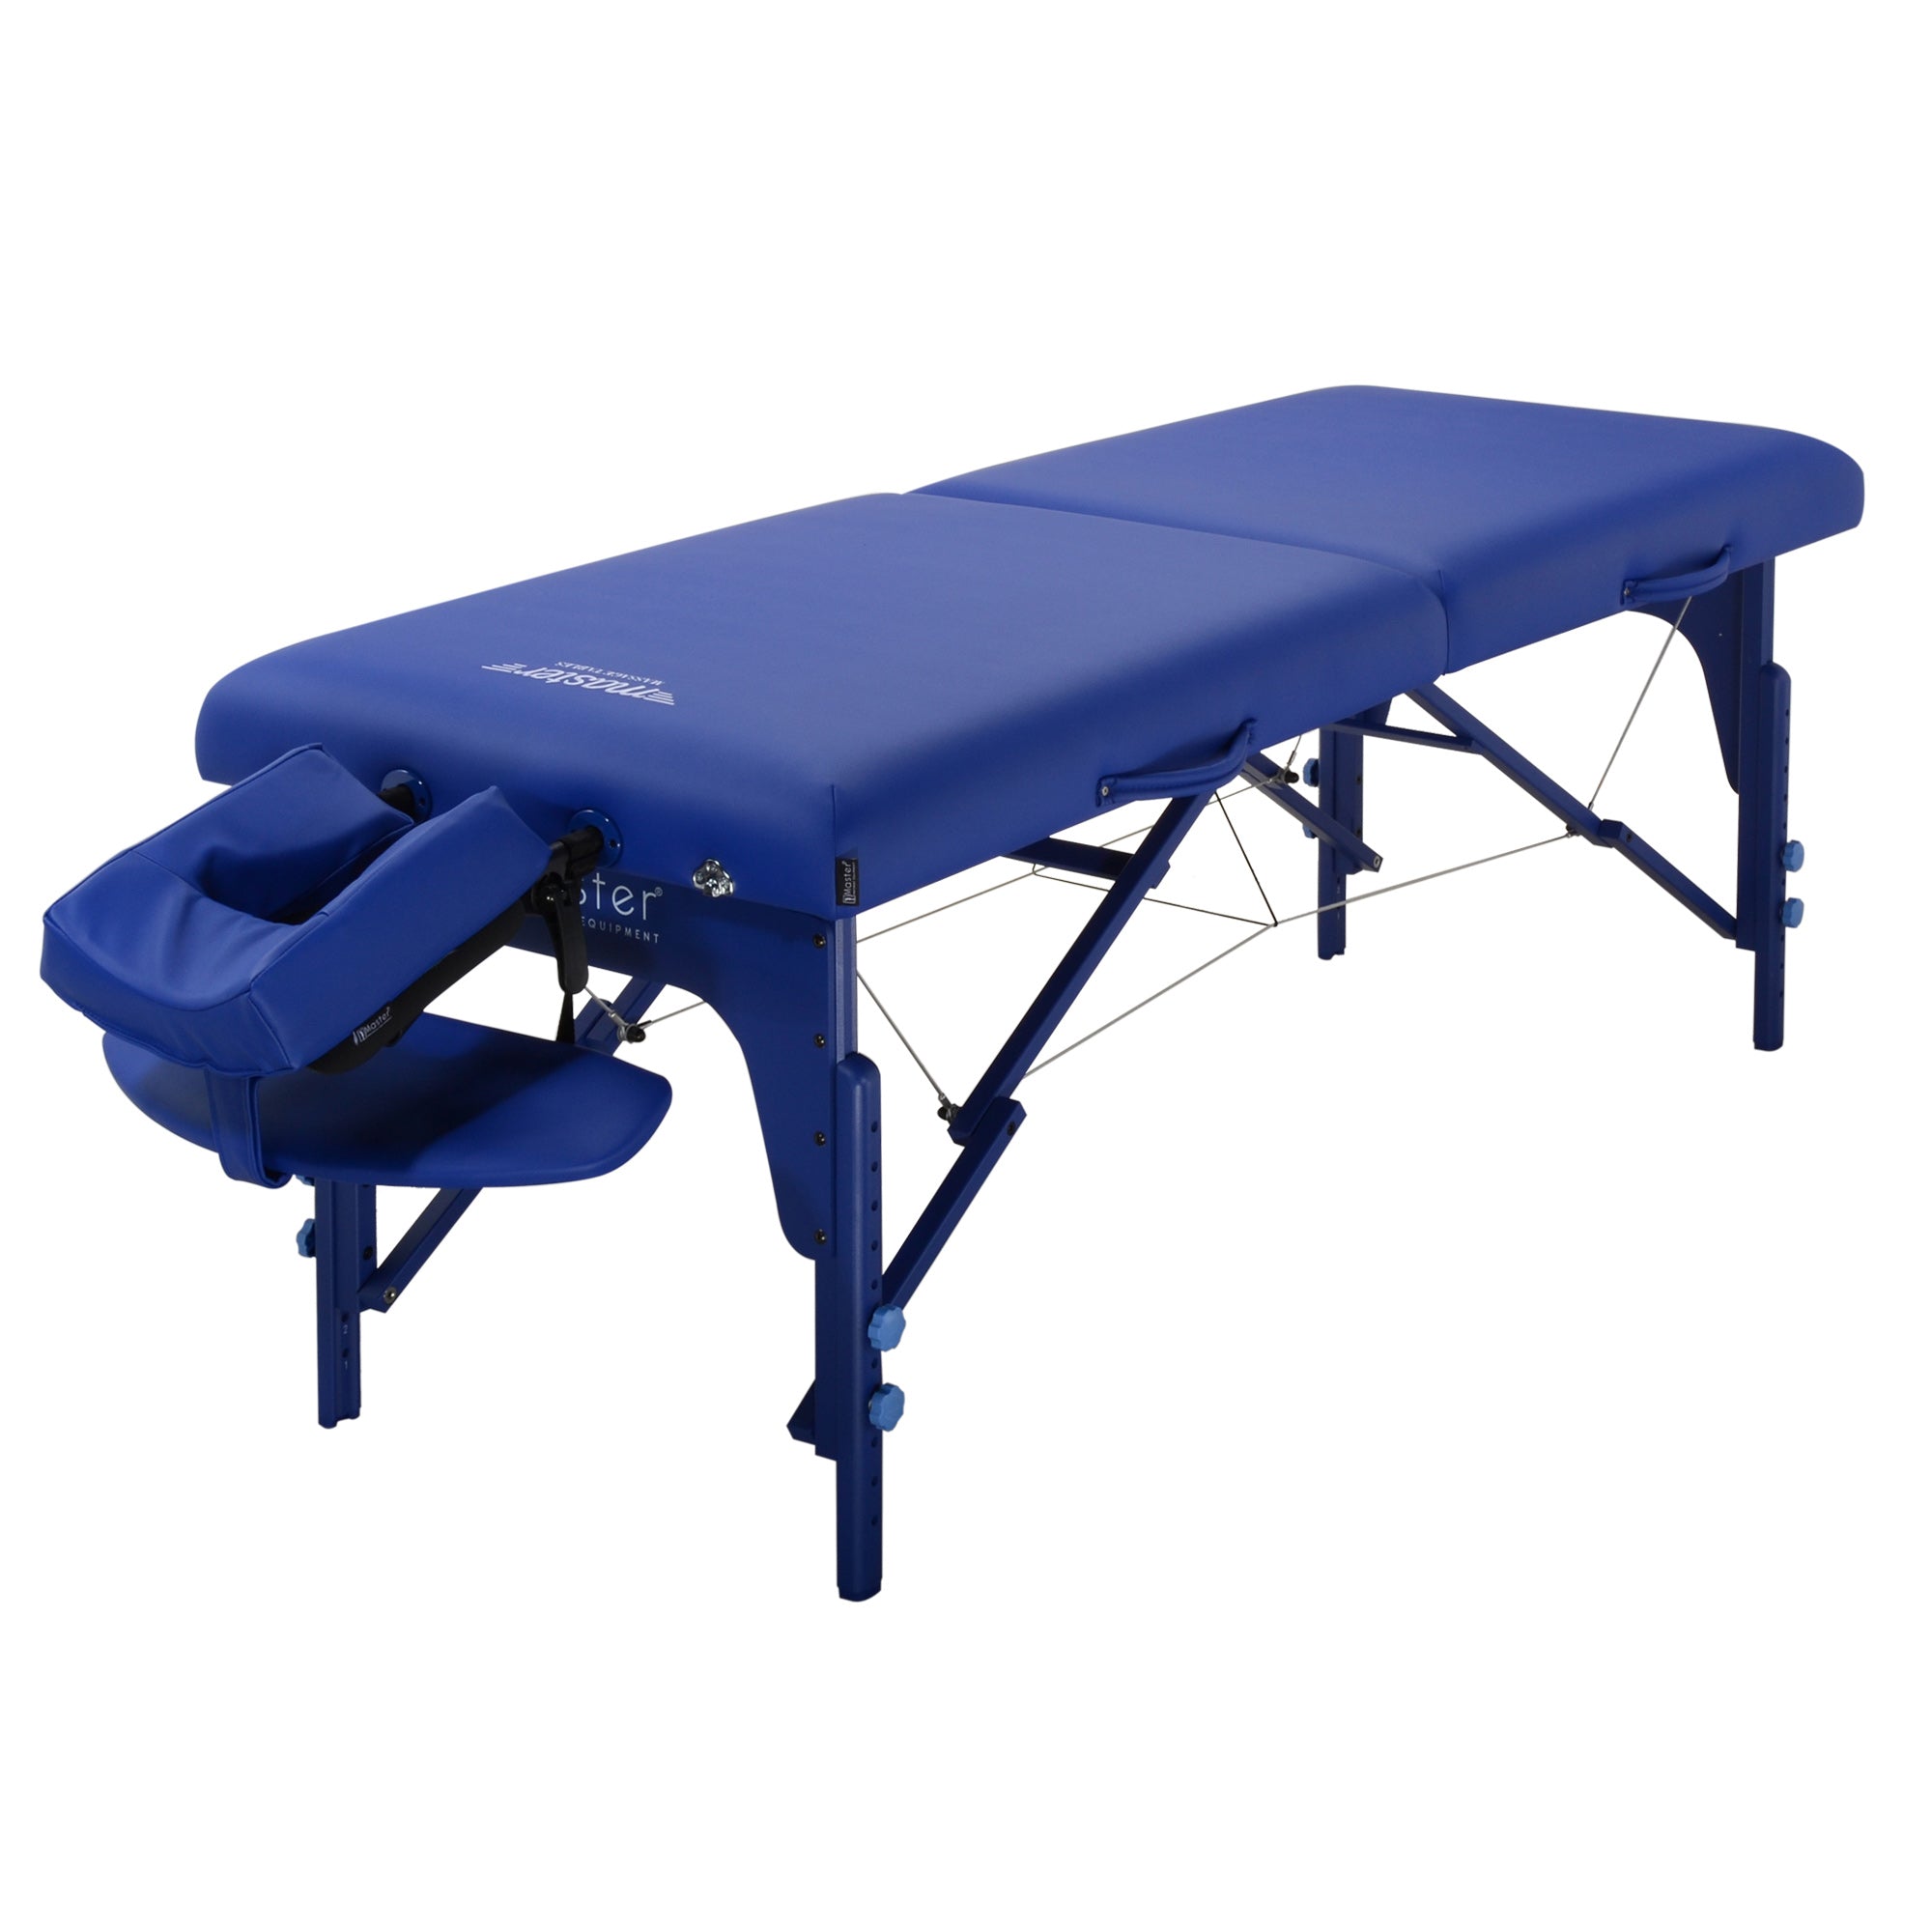 Portable Massage Tables $300-$600